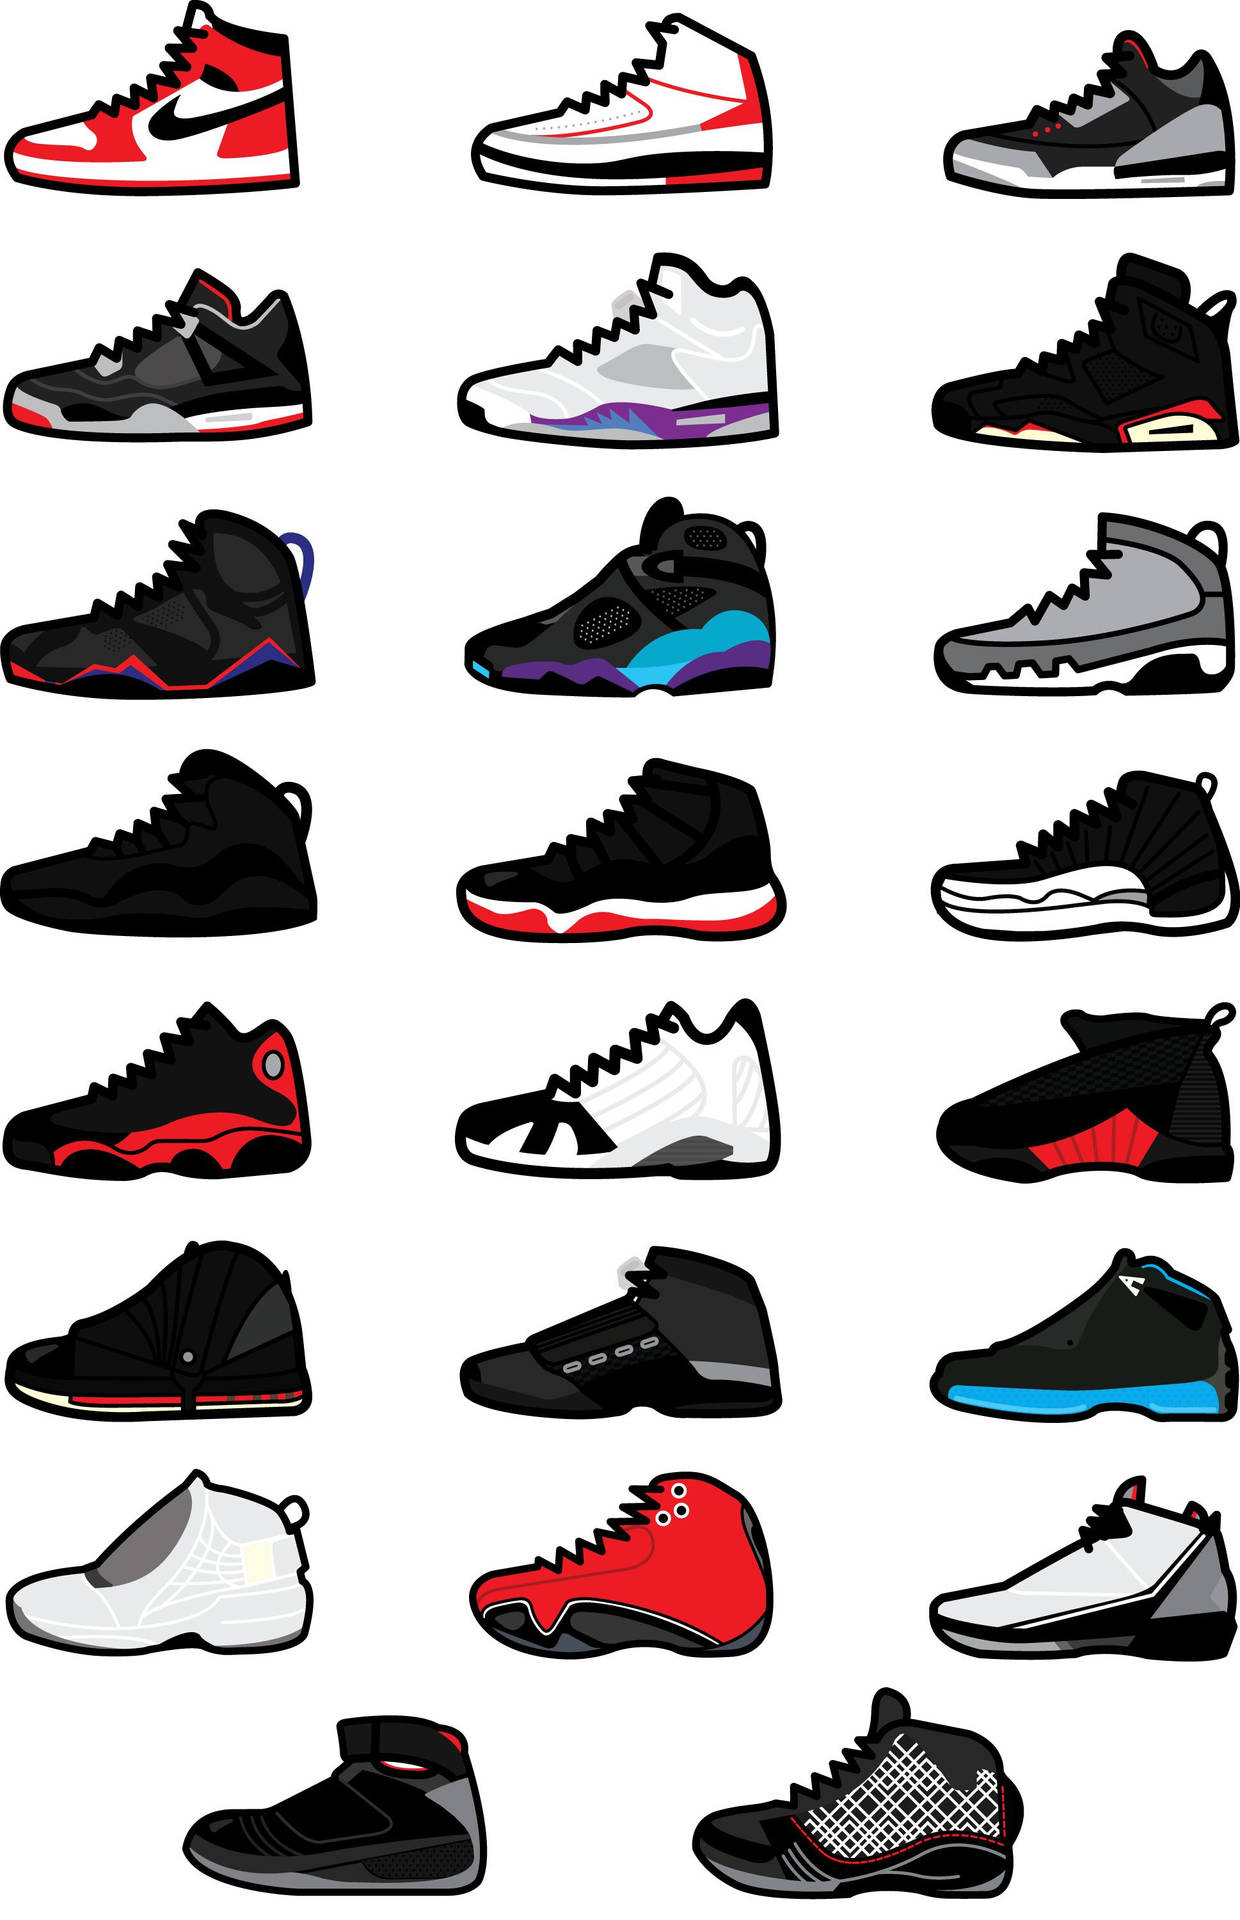 Sneaker Air Jordan Designs Background